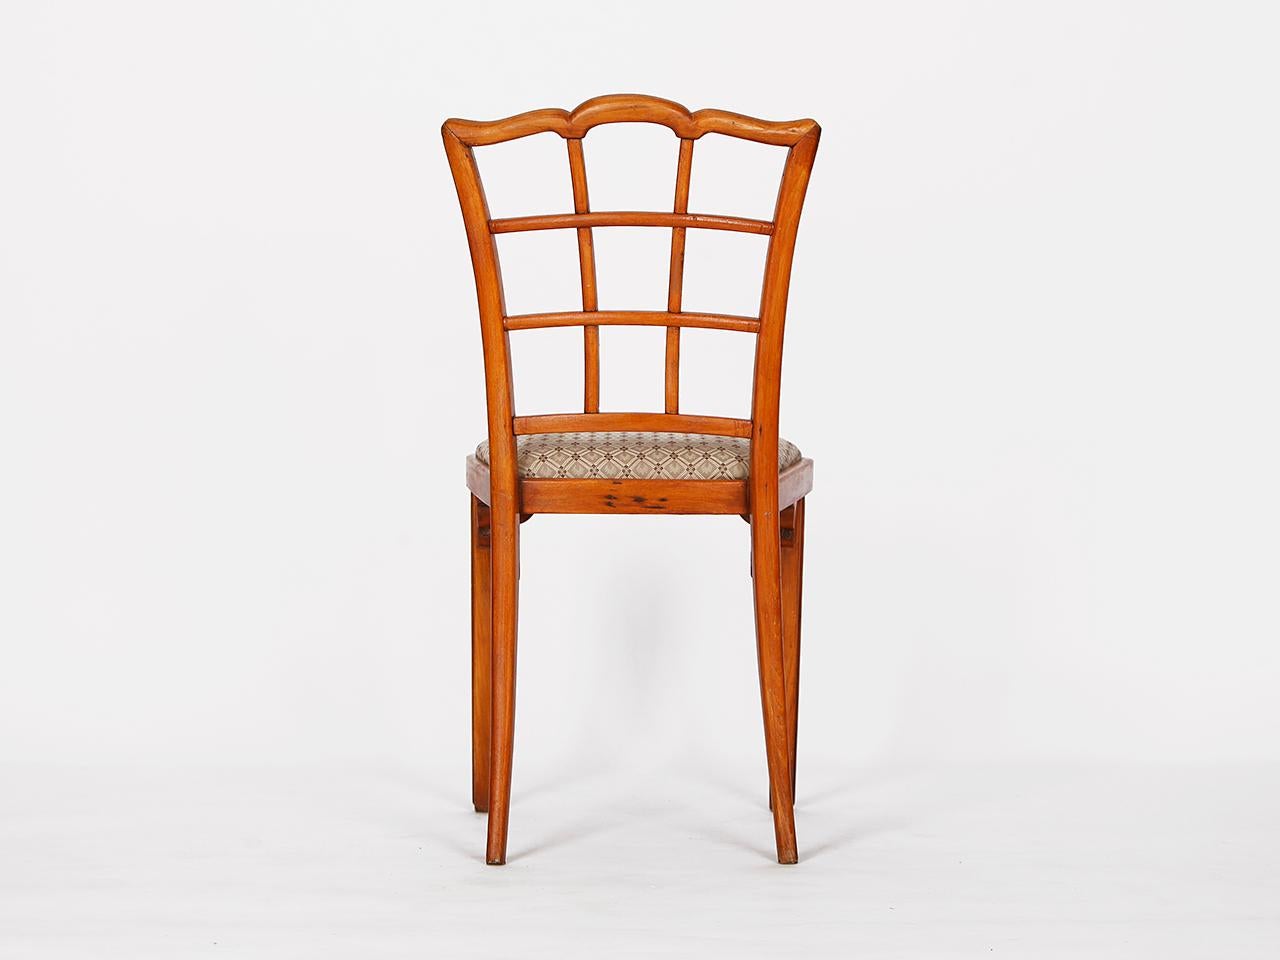 Austrian Art Nouveau Chair A 562 by Otto Prutscher for Thonet, 1910s For Sale